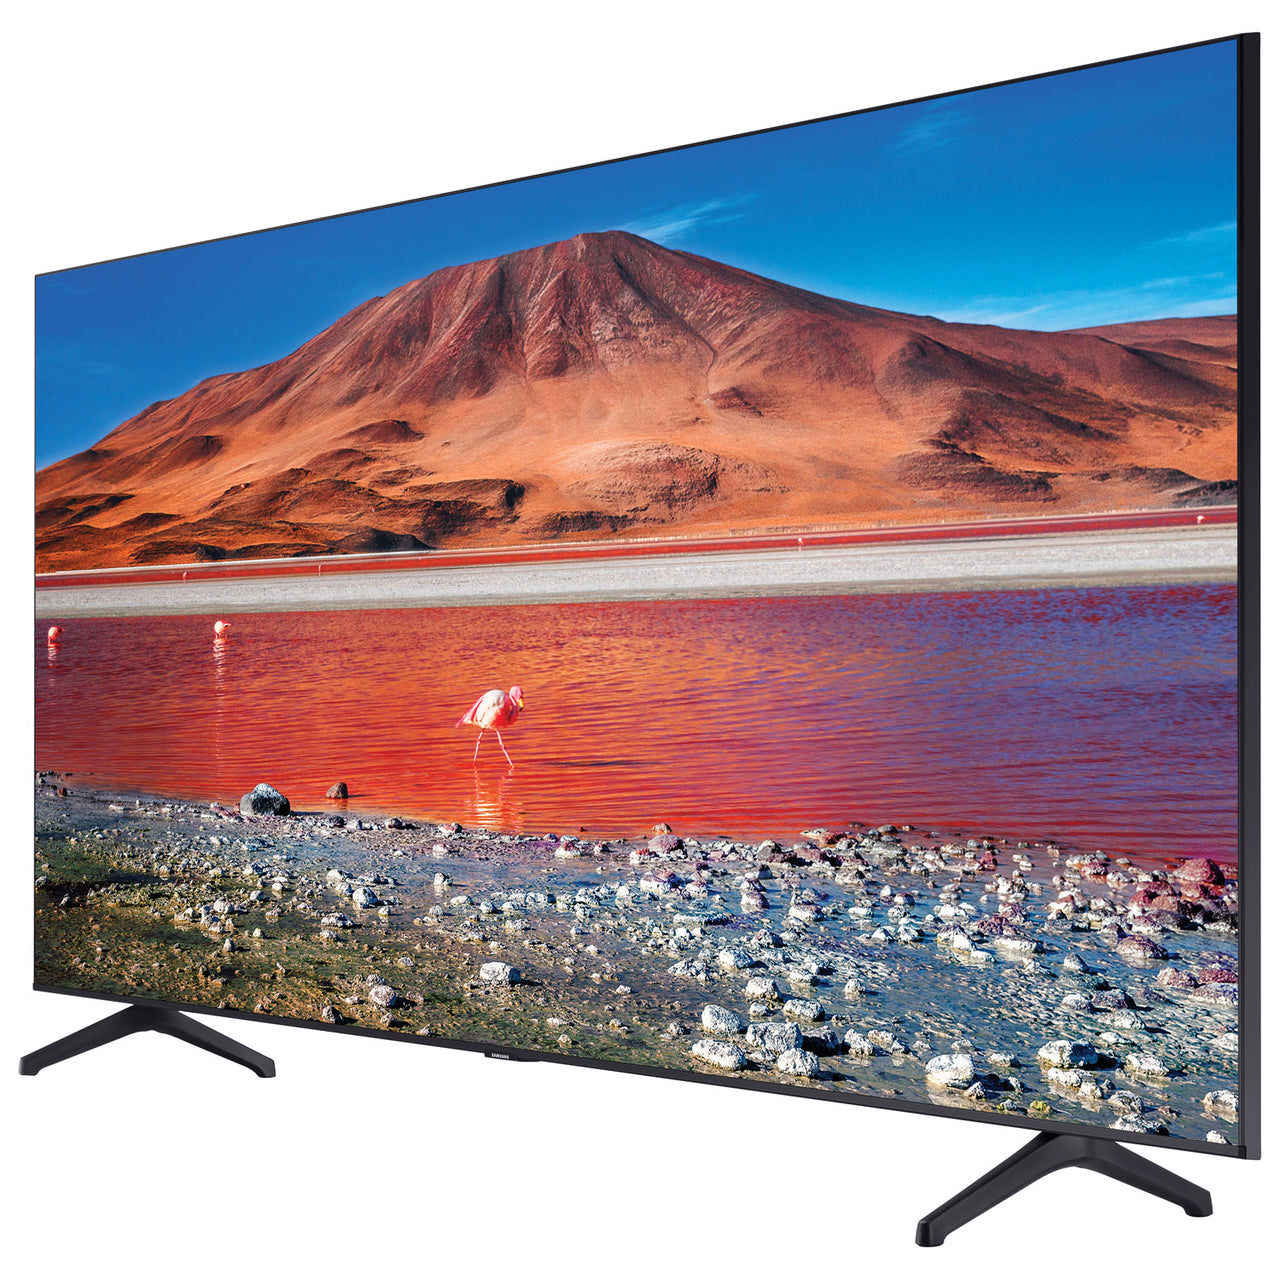 Samsung 55" 4K UHD HDR LED Tizen Smart TV (UN55TU7000FXZC) - Titan Grey